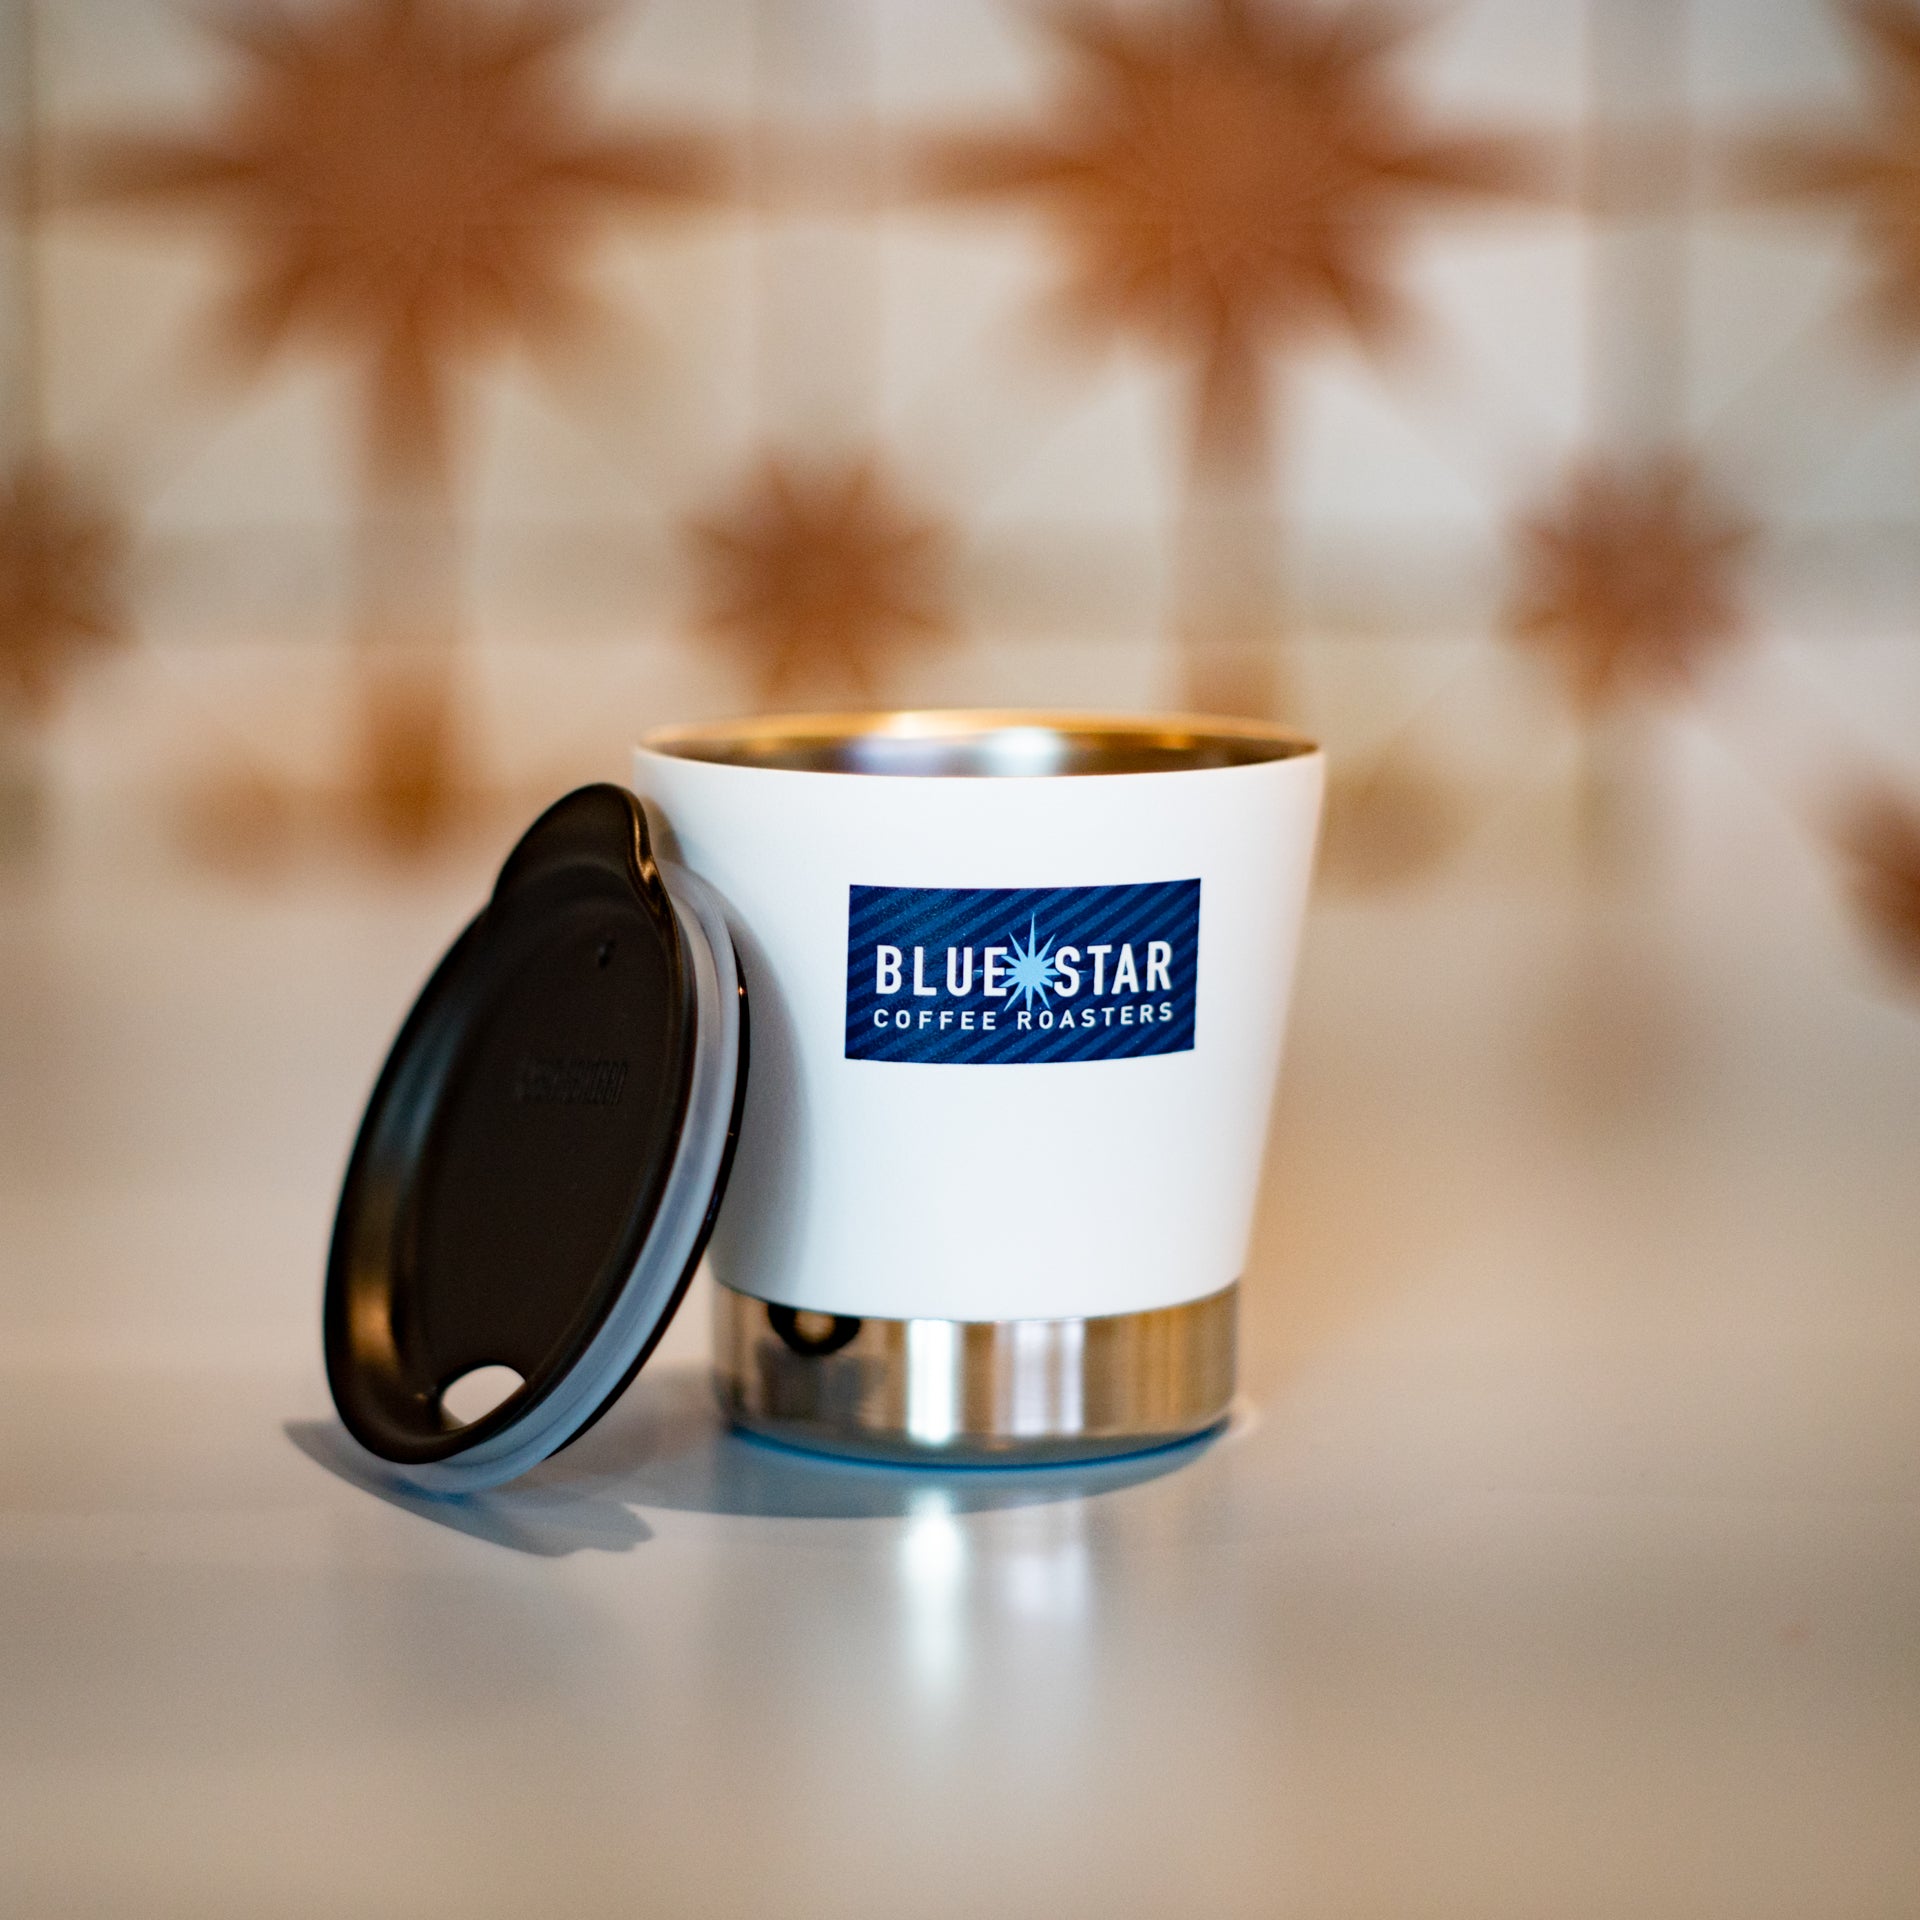 Kleen Kanteen Travel Mug 12 oz — Mighty Good Coffee Roasting Co.